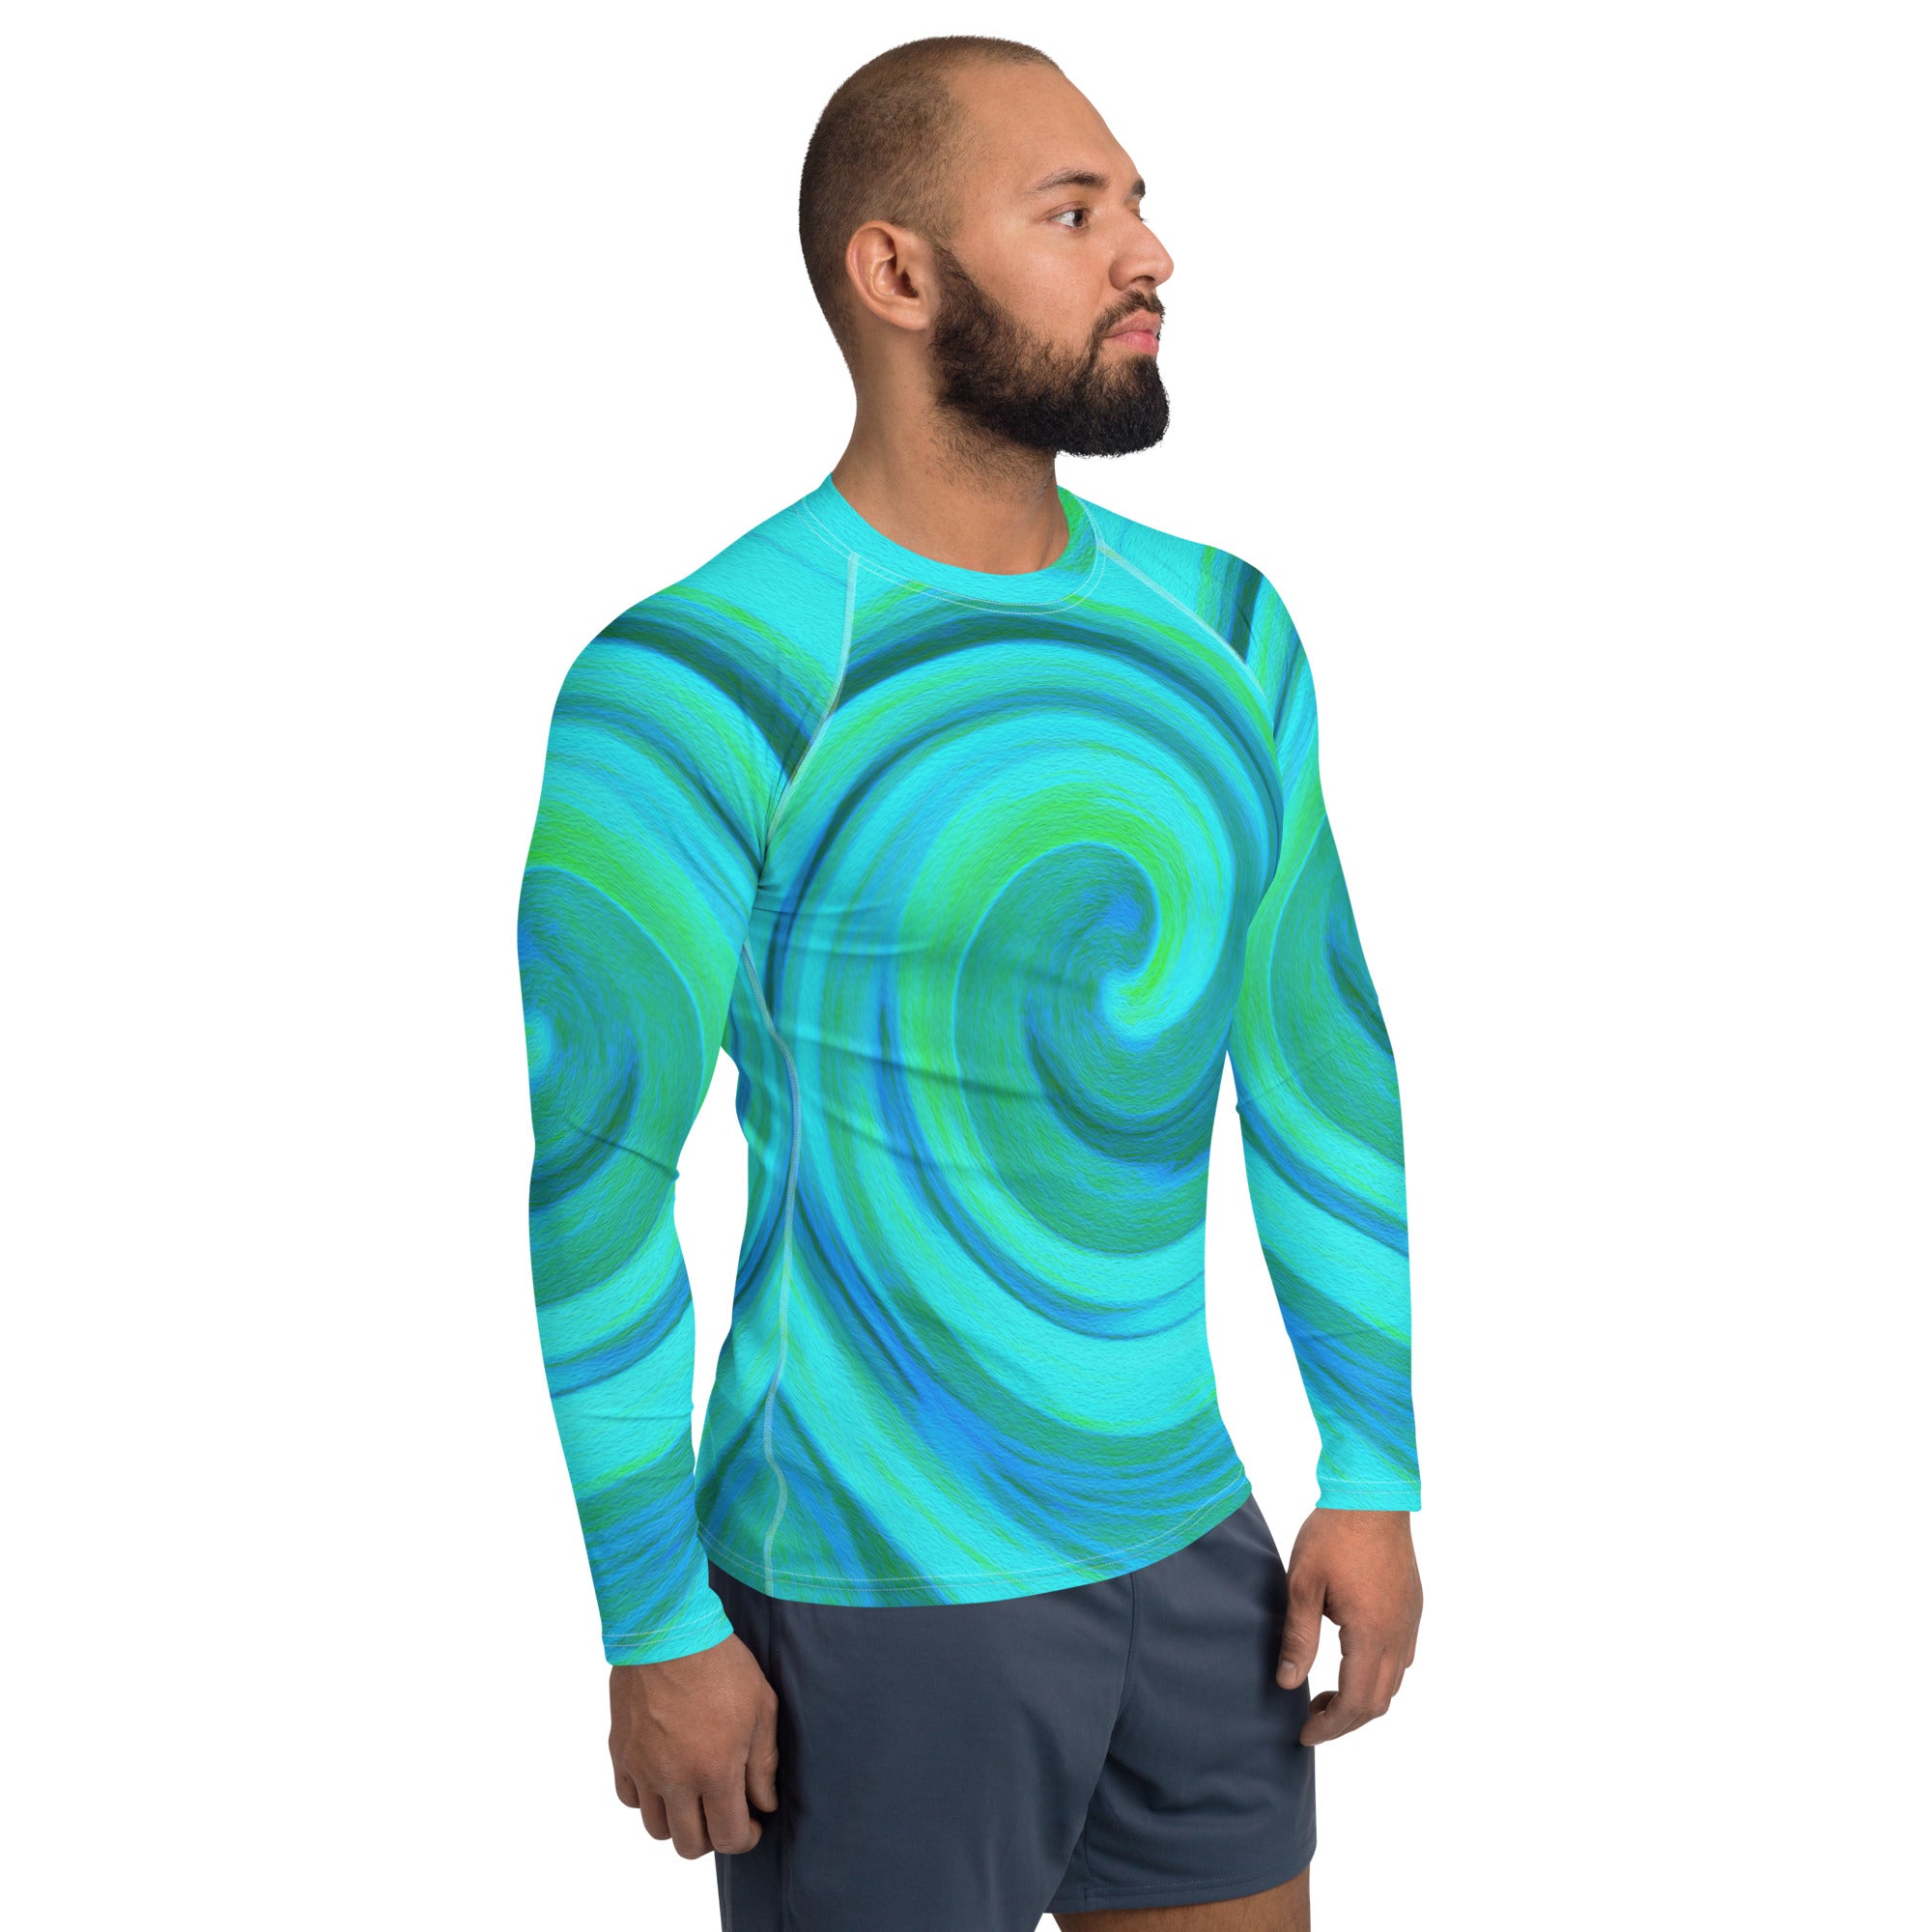 Men's Athletic Rash Guard Shirts - Groovy Cool Abstract Aqua Liquid Art Swirl